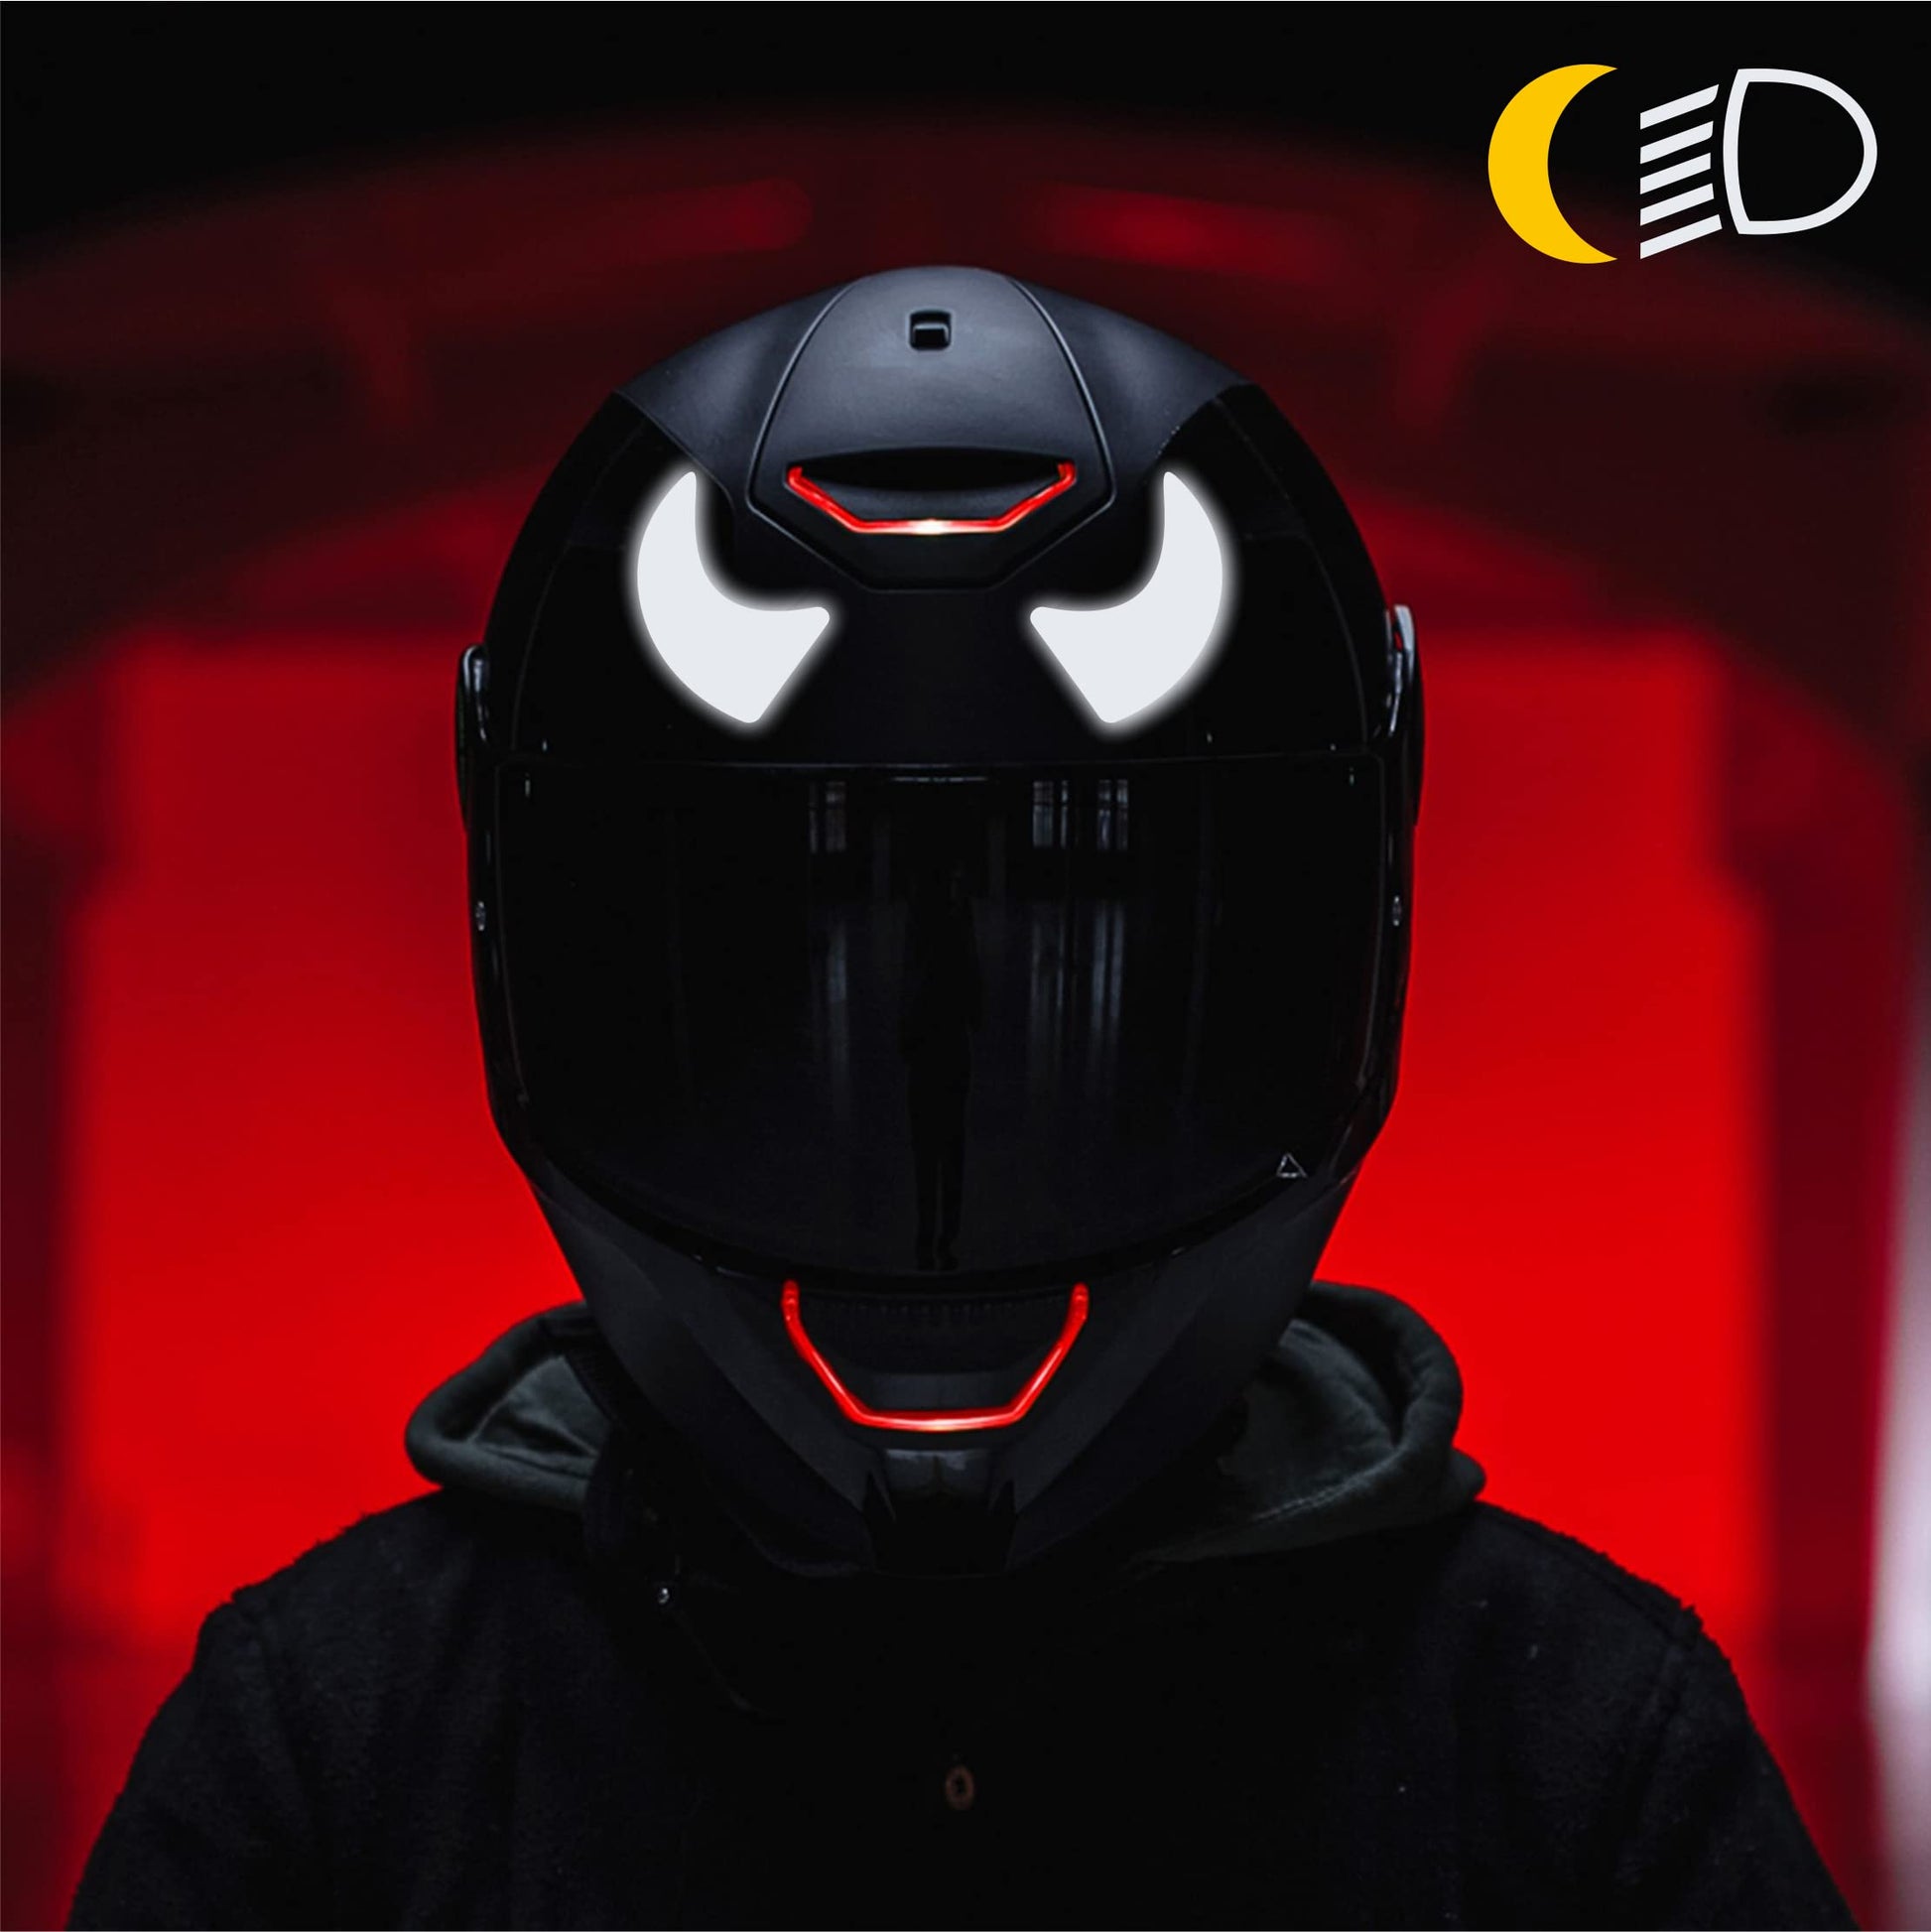 DualColorPrints Moto pegatinas casco cuernos (2 uds) Cm 10x5,8 reflectante  fluorescente reflectante pegatinas casco scooter COD.C0061